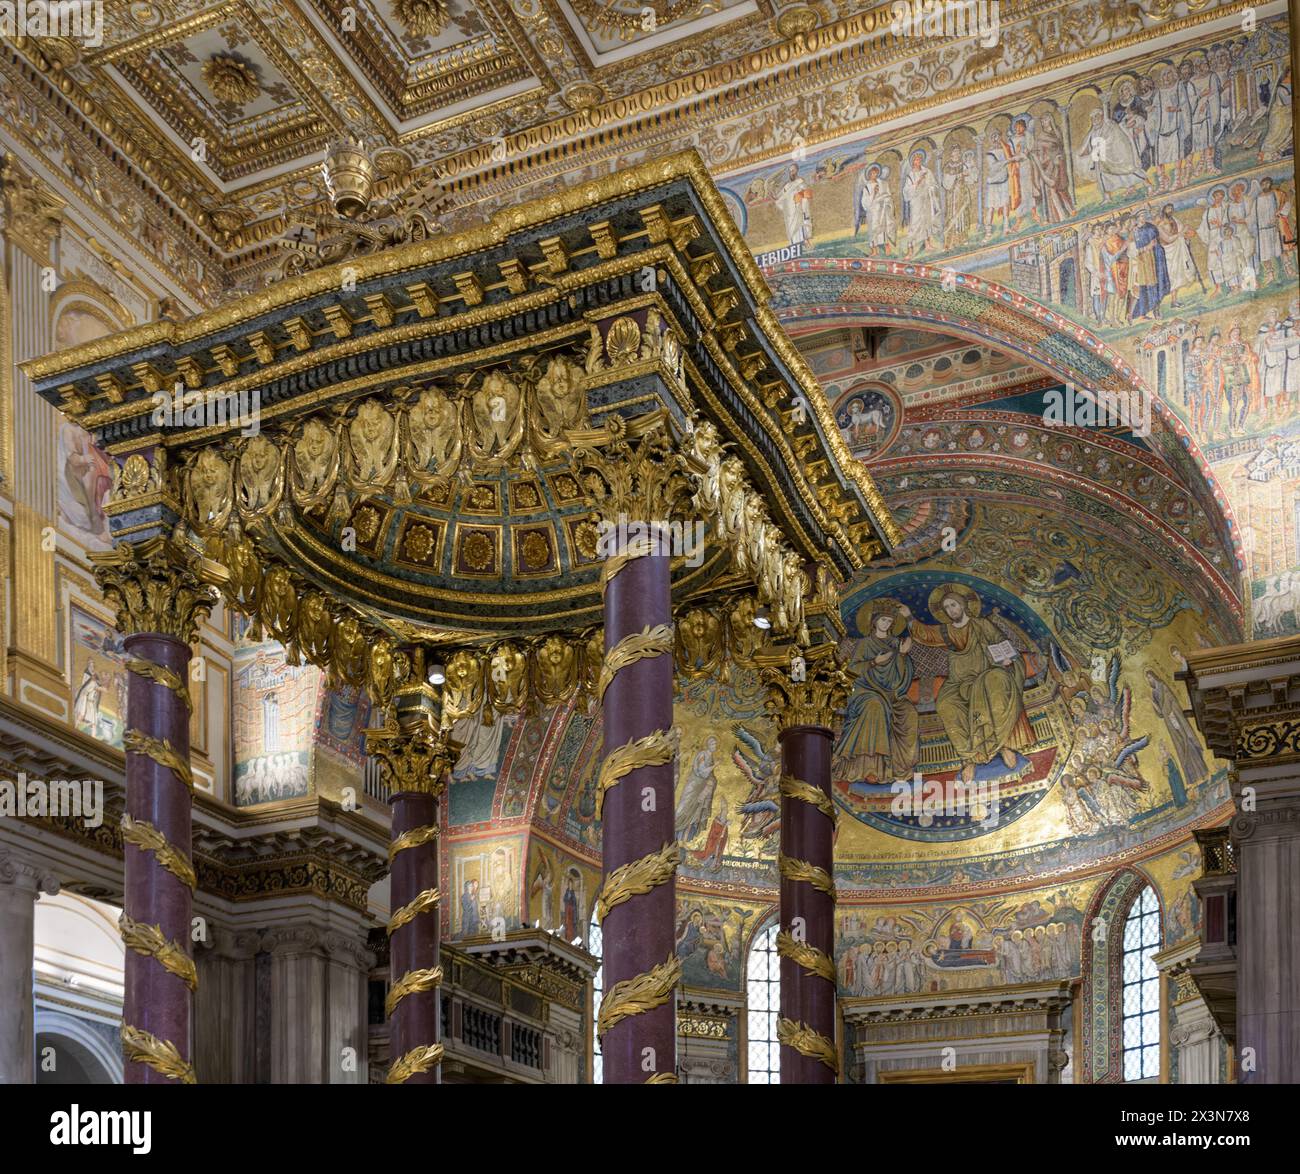 The baldacchino, mosaics of triumphal arch and the apse in the Basilica of Saint Mary Major (Santa Maria Maggiore). Major papal basilica. Rome, Italy Stock Photo